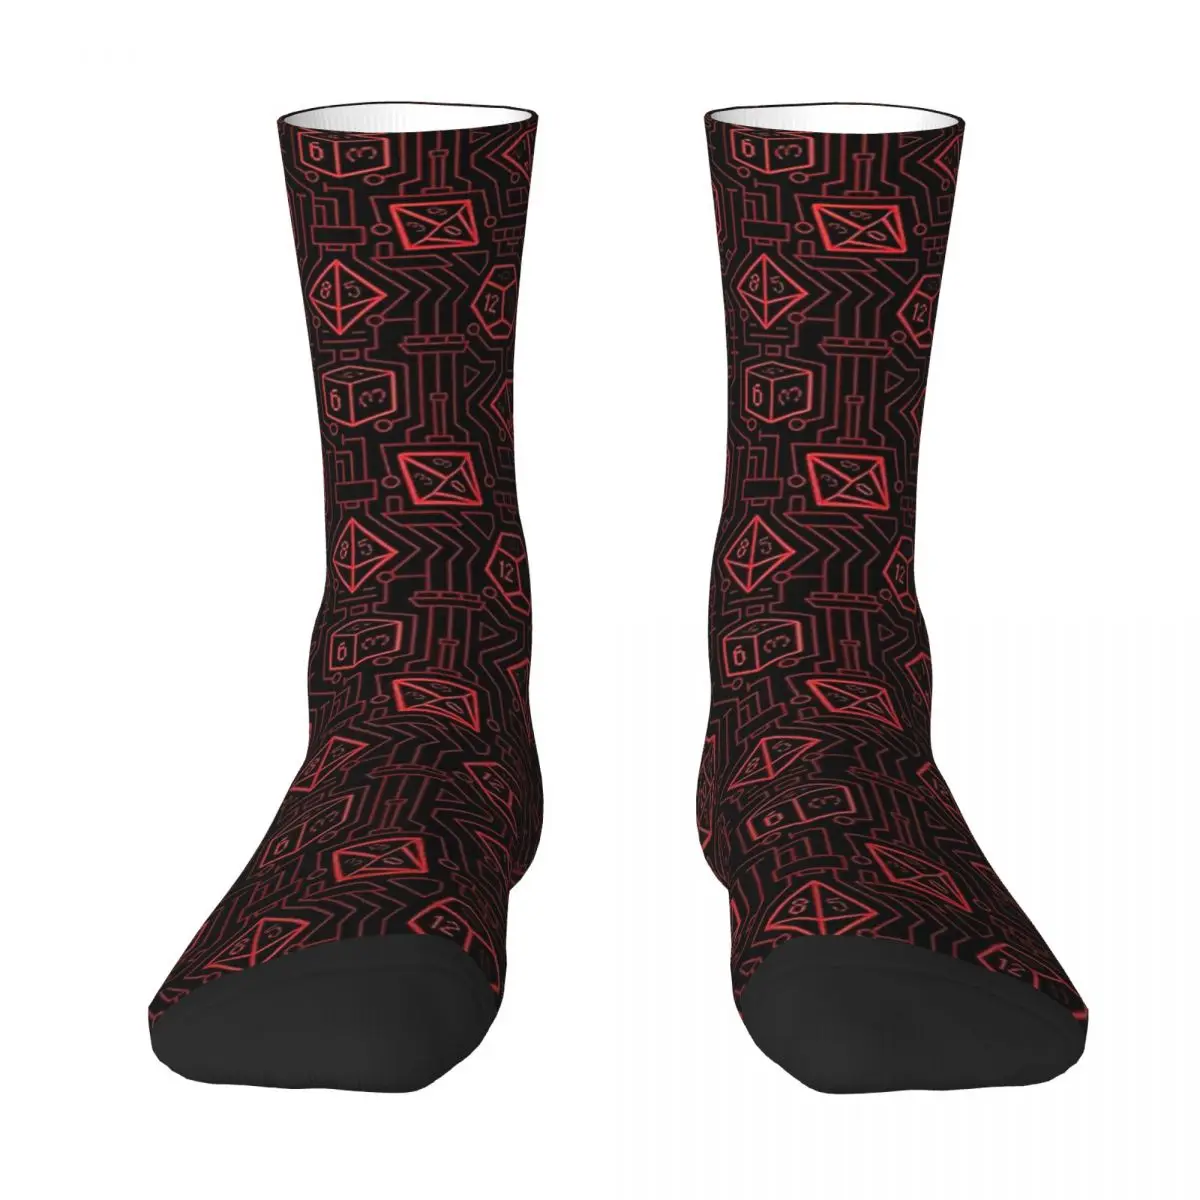 Tech D20 Pattern Adult Socks Unisex socks,men Socks women Socks